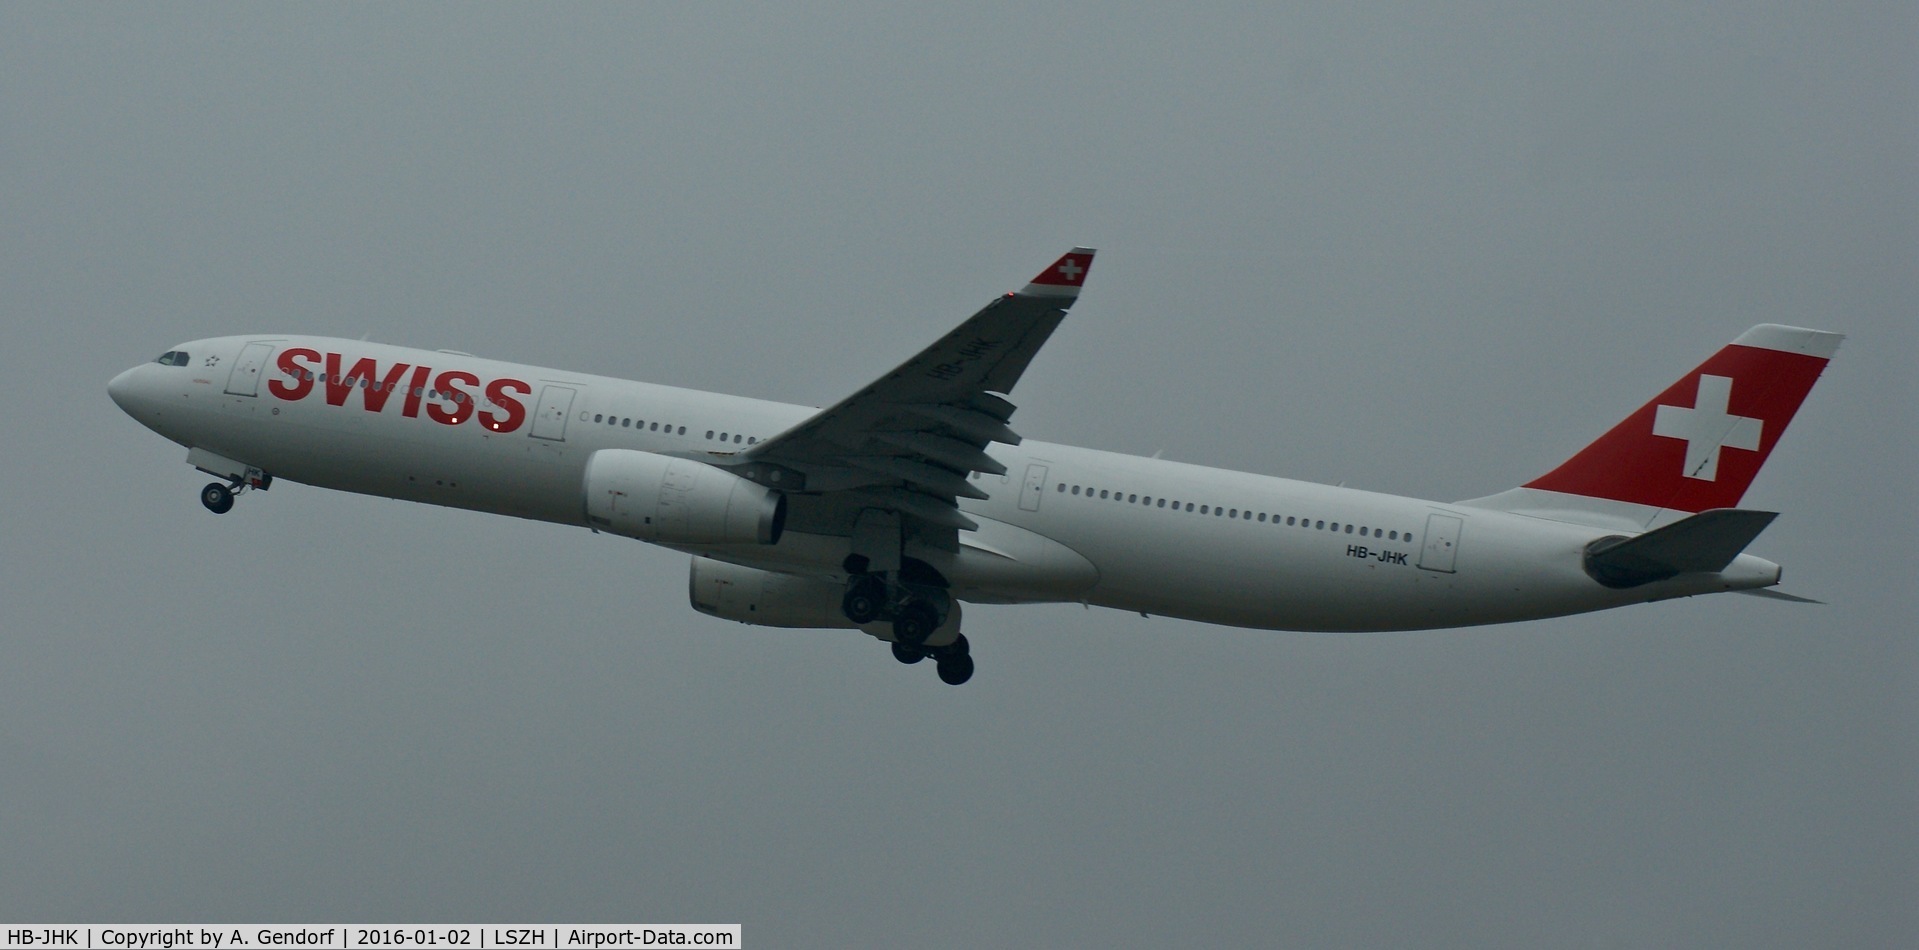 HB-JHK, 2011 Airbus A330-343X C/N 1276, Swiss, is here departing at Zürich-Kloten(LSZH)